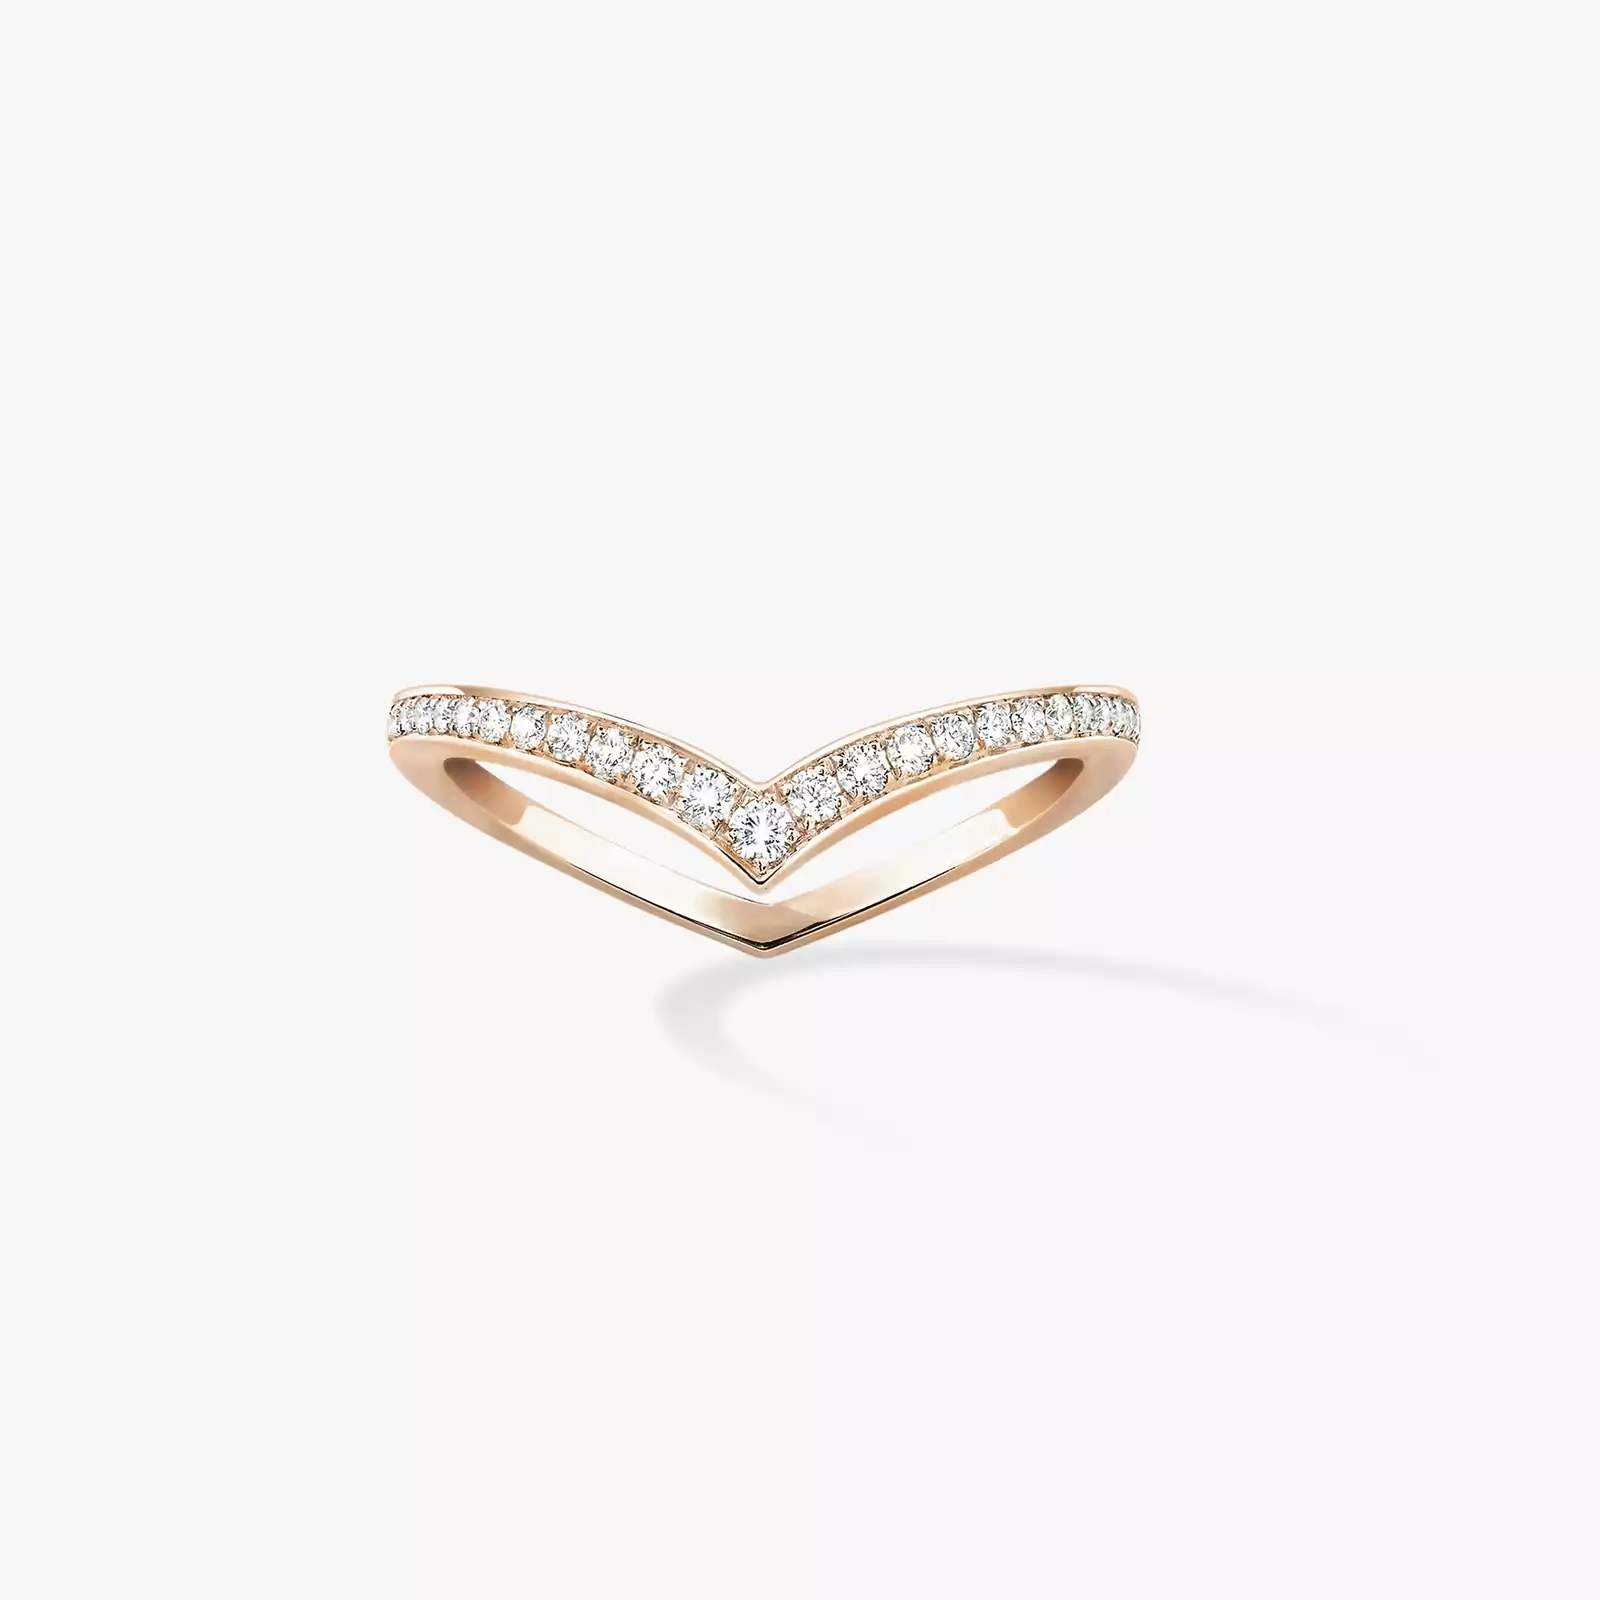 Fiery Diamond Pavé Wedding Ring Pink Gold For Her Diamond Ring 12088-PG